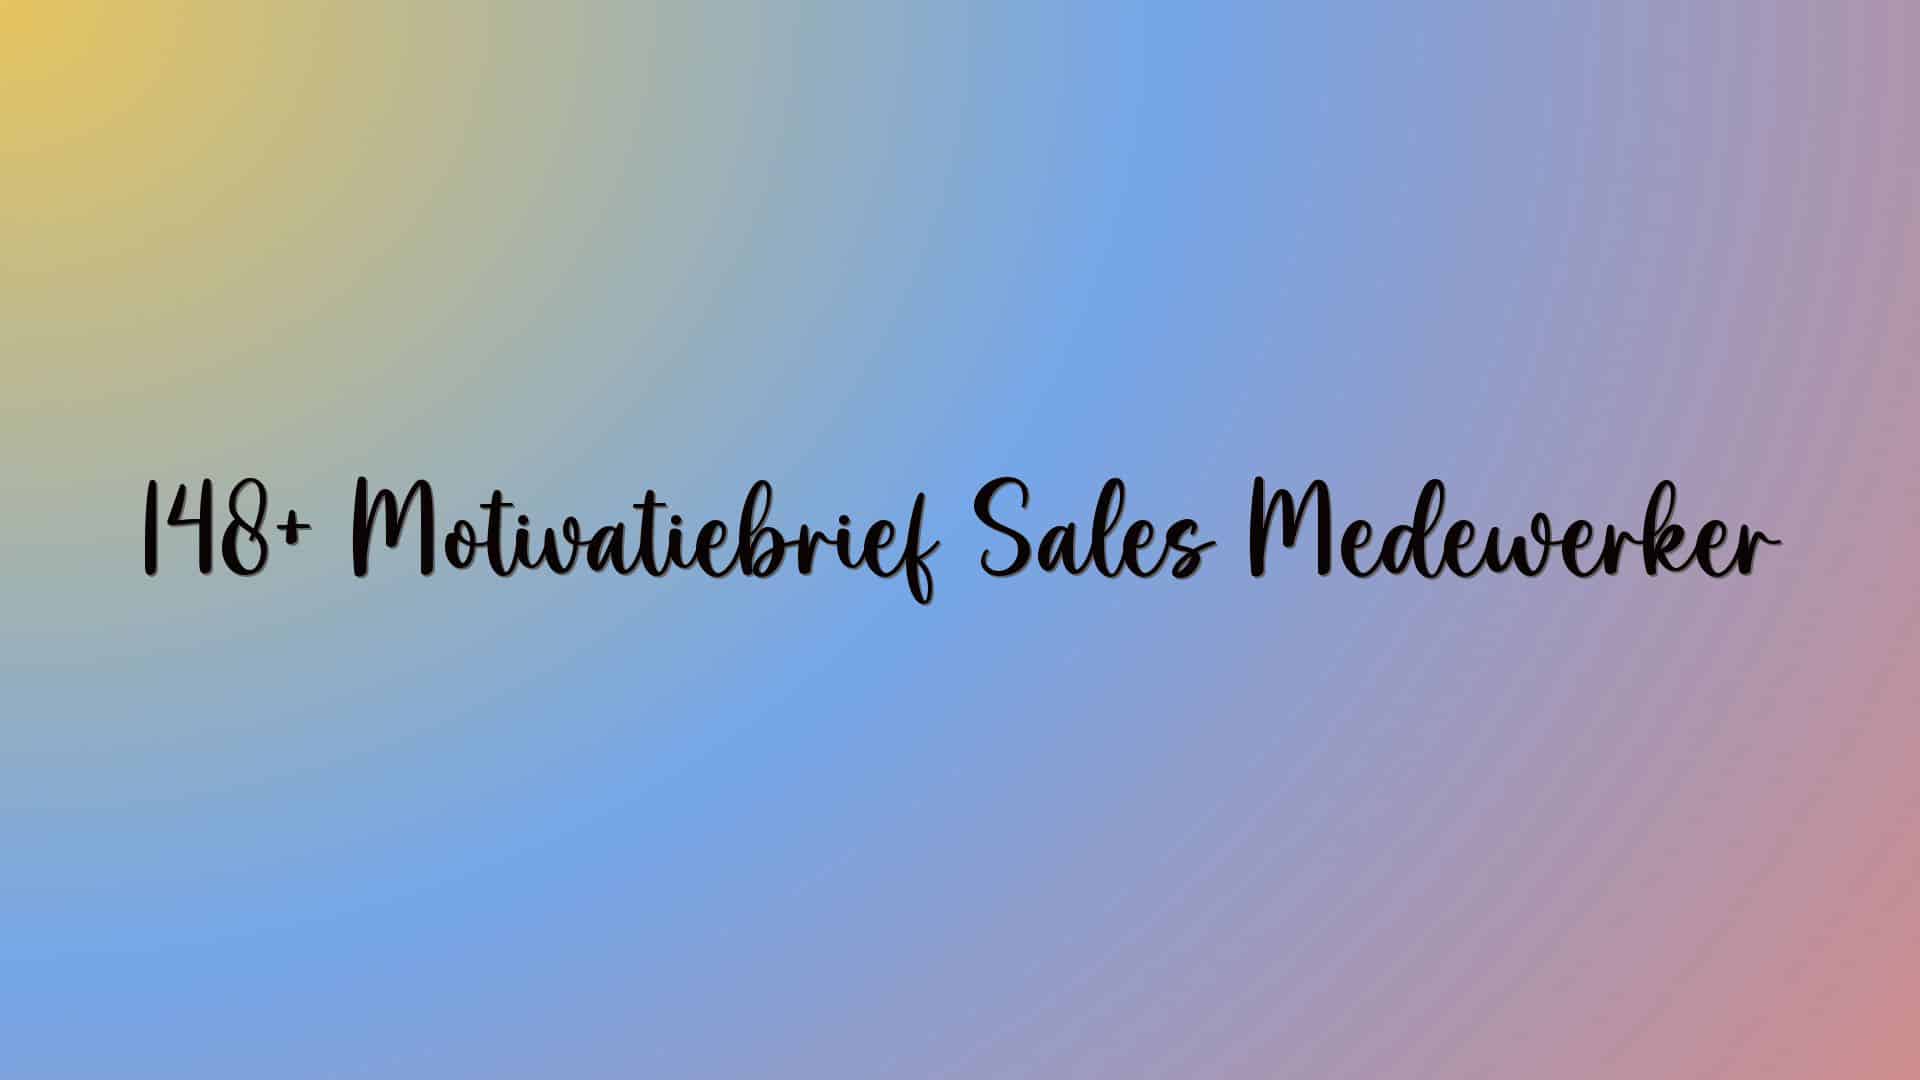 148+ Motivatiebrief Sales Medewerker